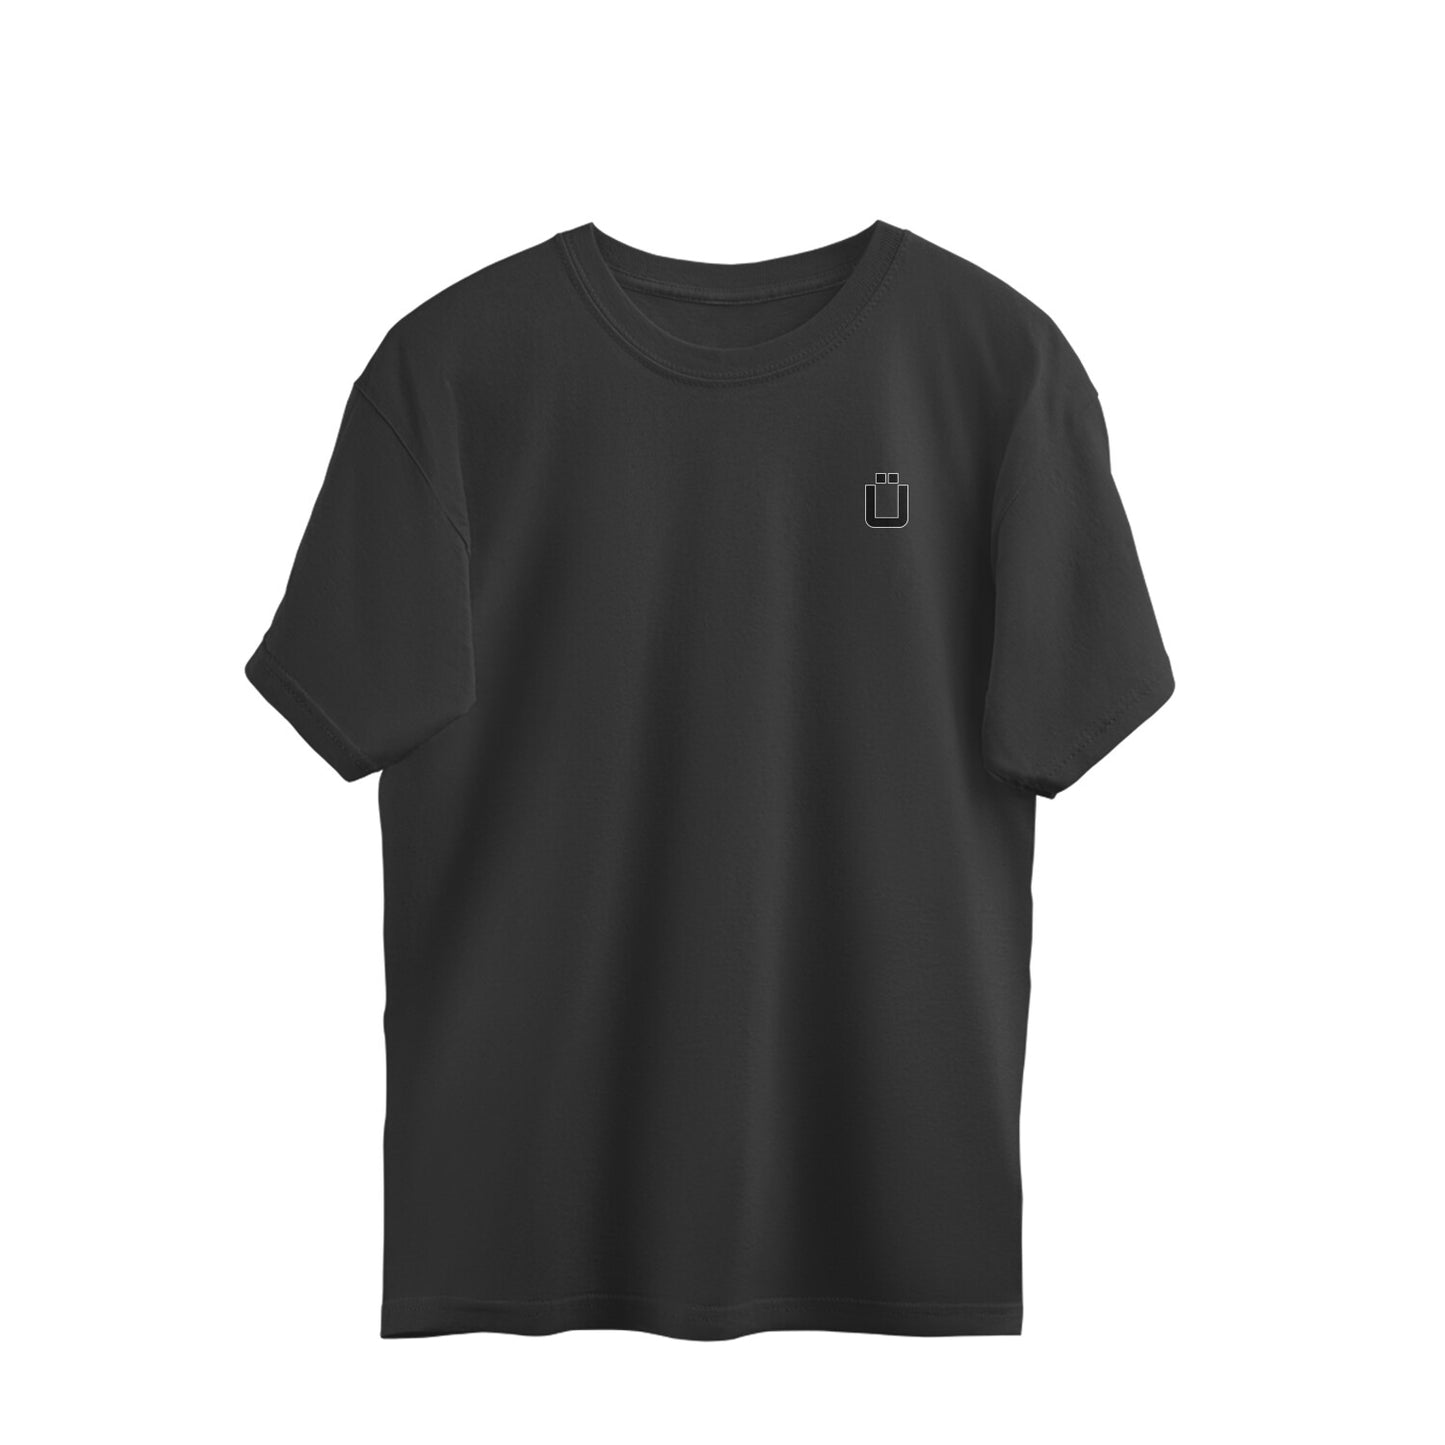 Jujutsu Kaisen - Toji Zenin - Design Inspired By Pinterest - Oversized T-shirt